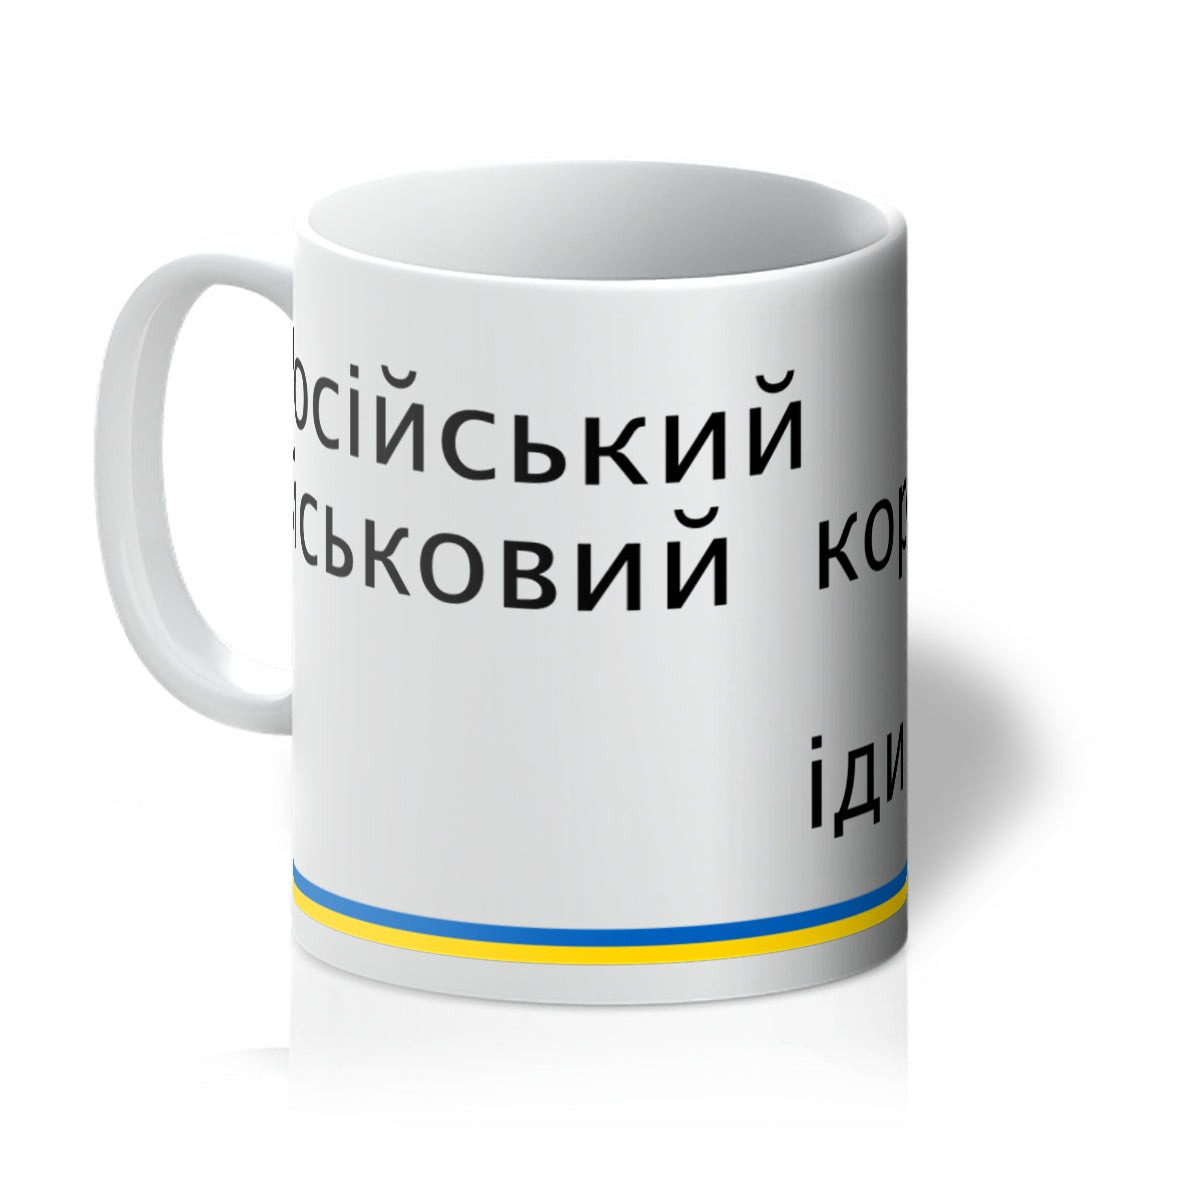 Fuck Russia Mug (Ukrainian translation) Mug (with country colours)